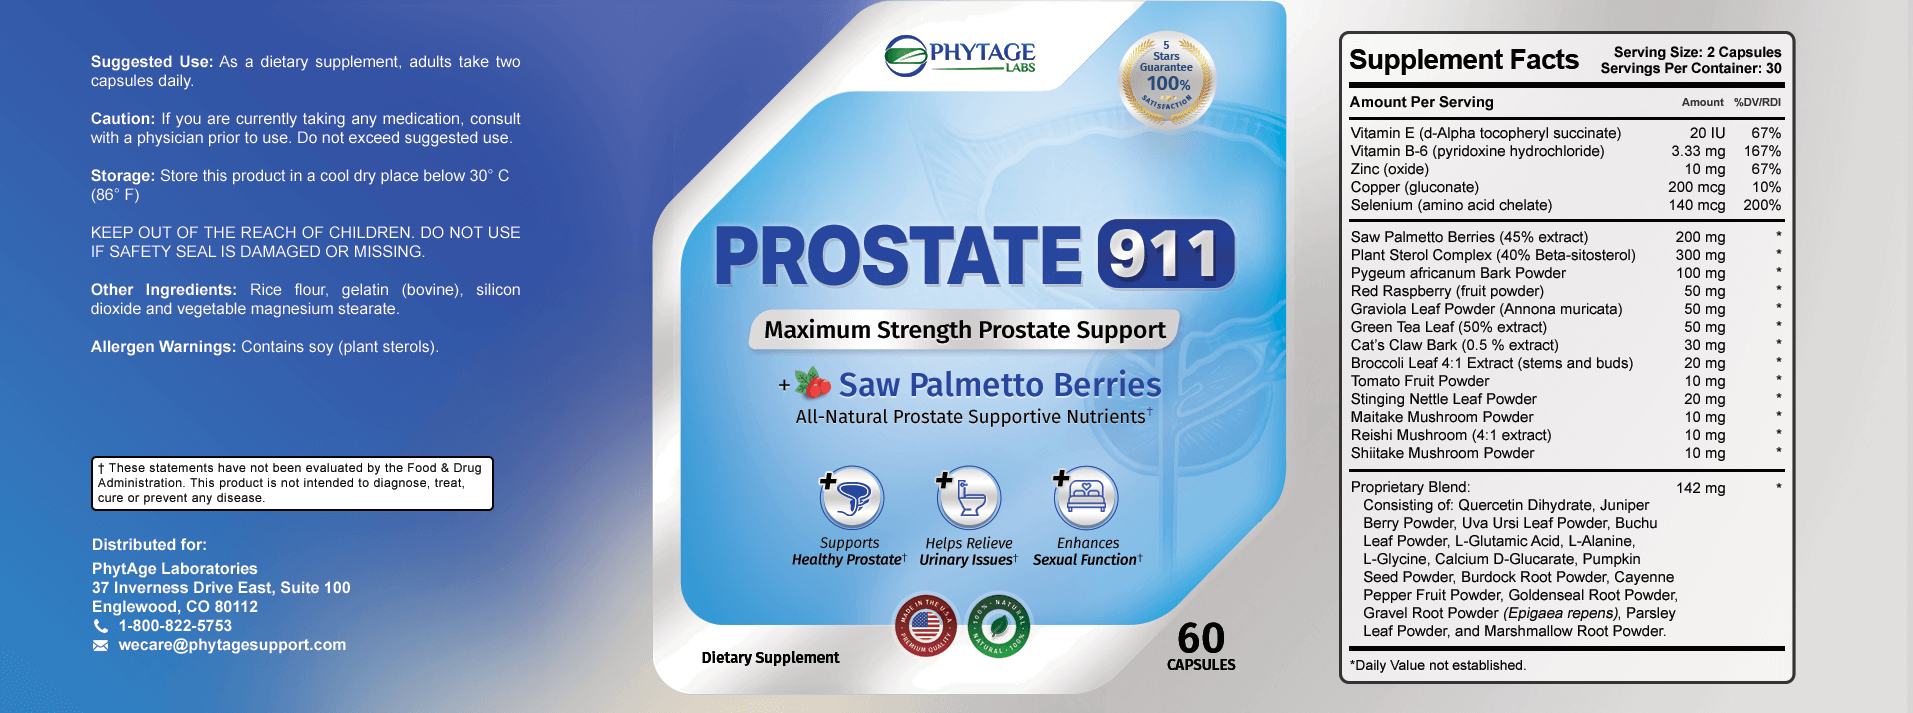 prostate 911 ingredients